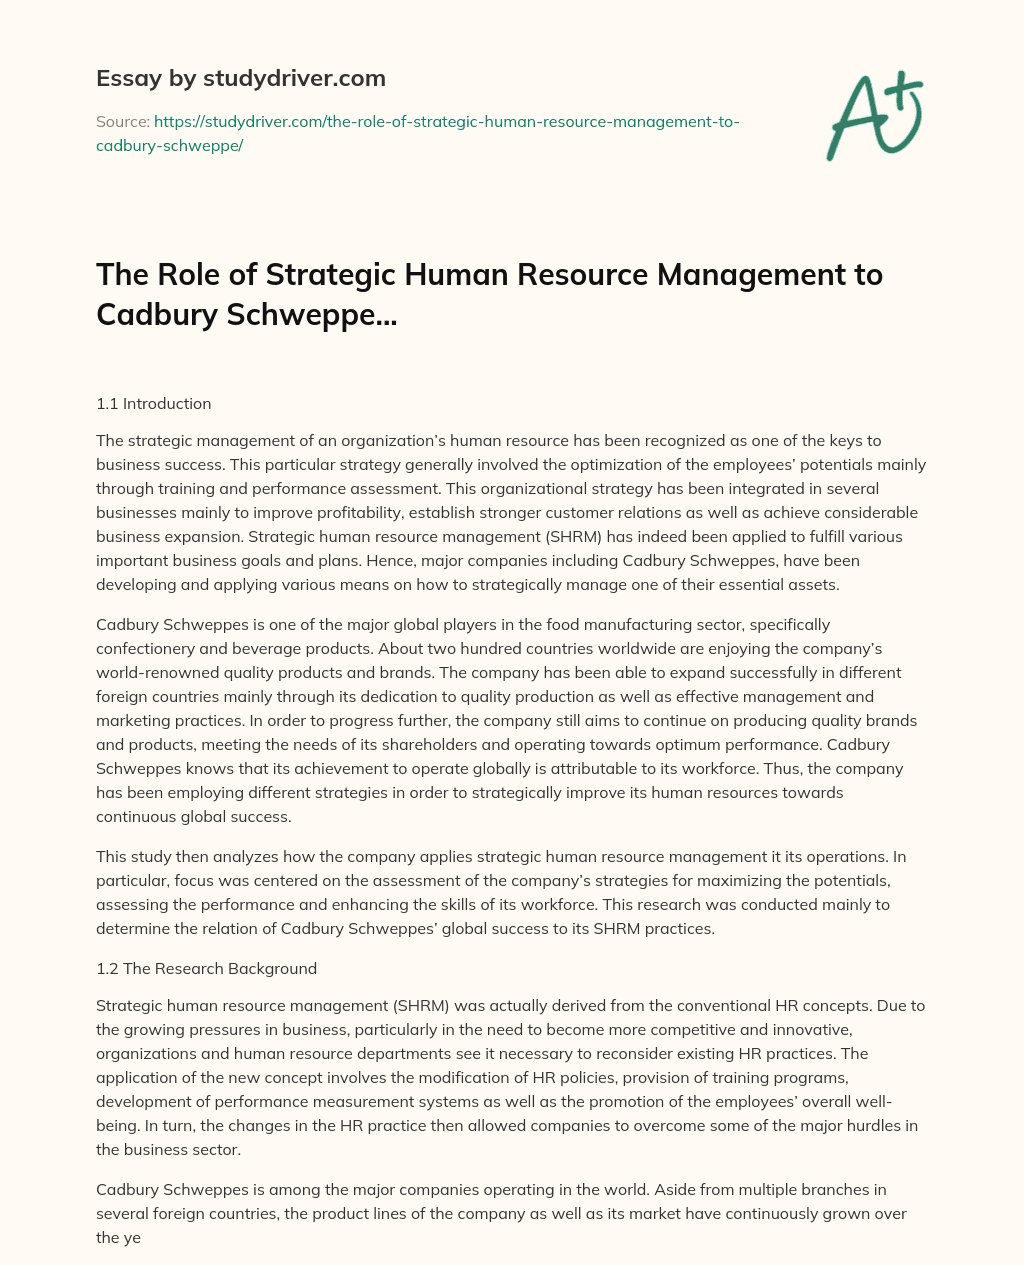 The Role of Strategic Human Resource Management to Cadbury Schweppe… essay